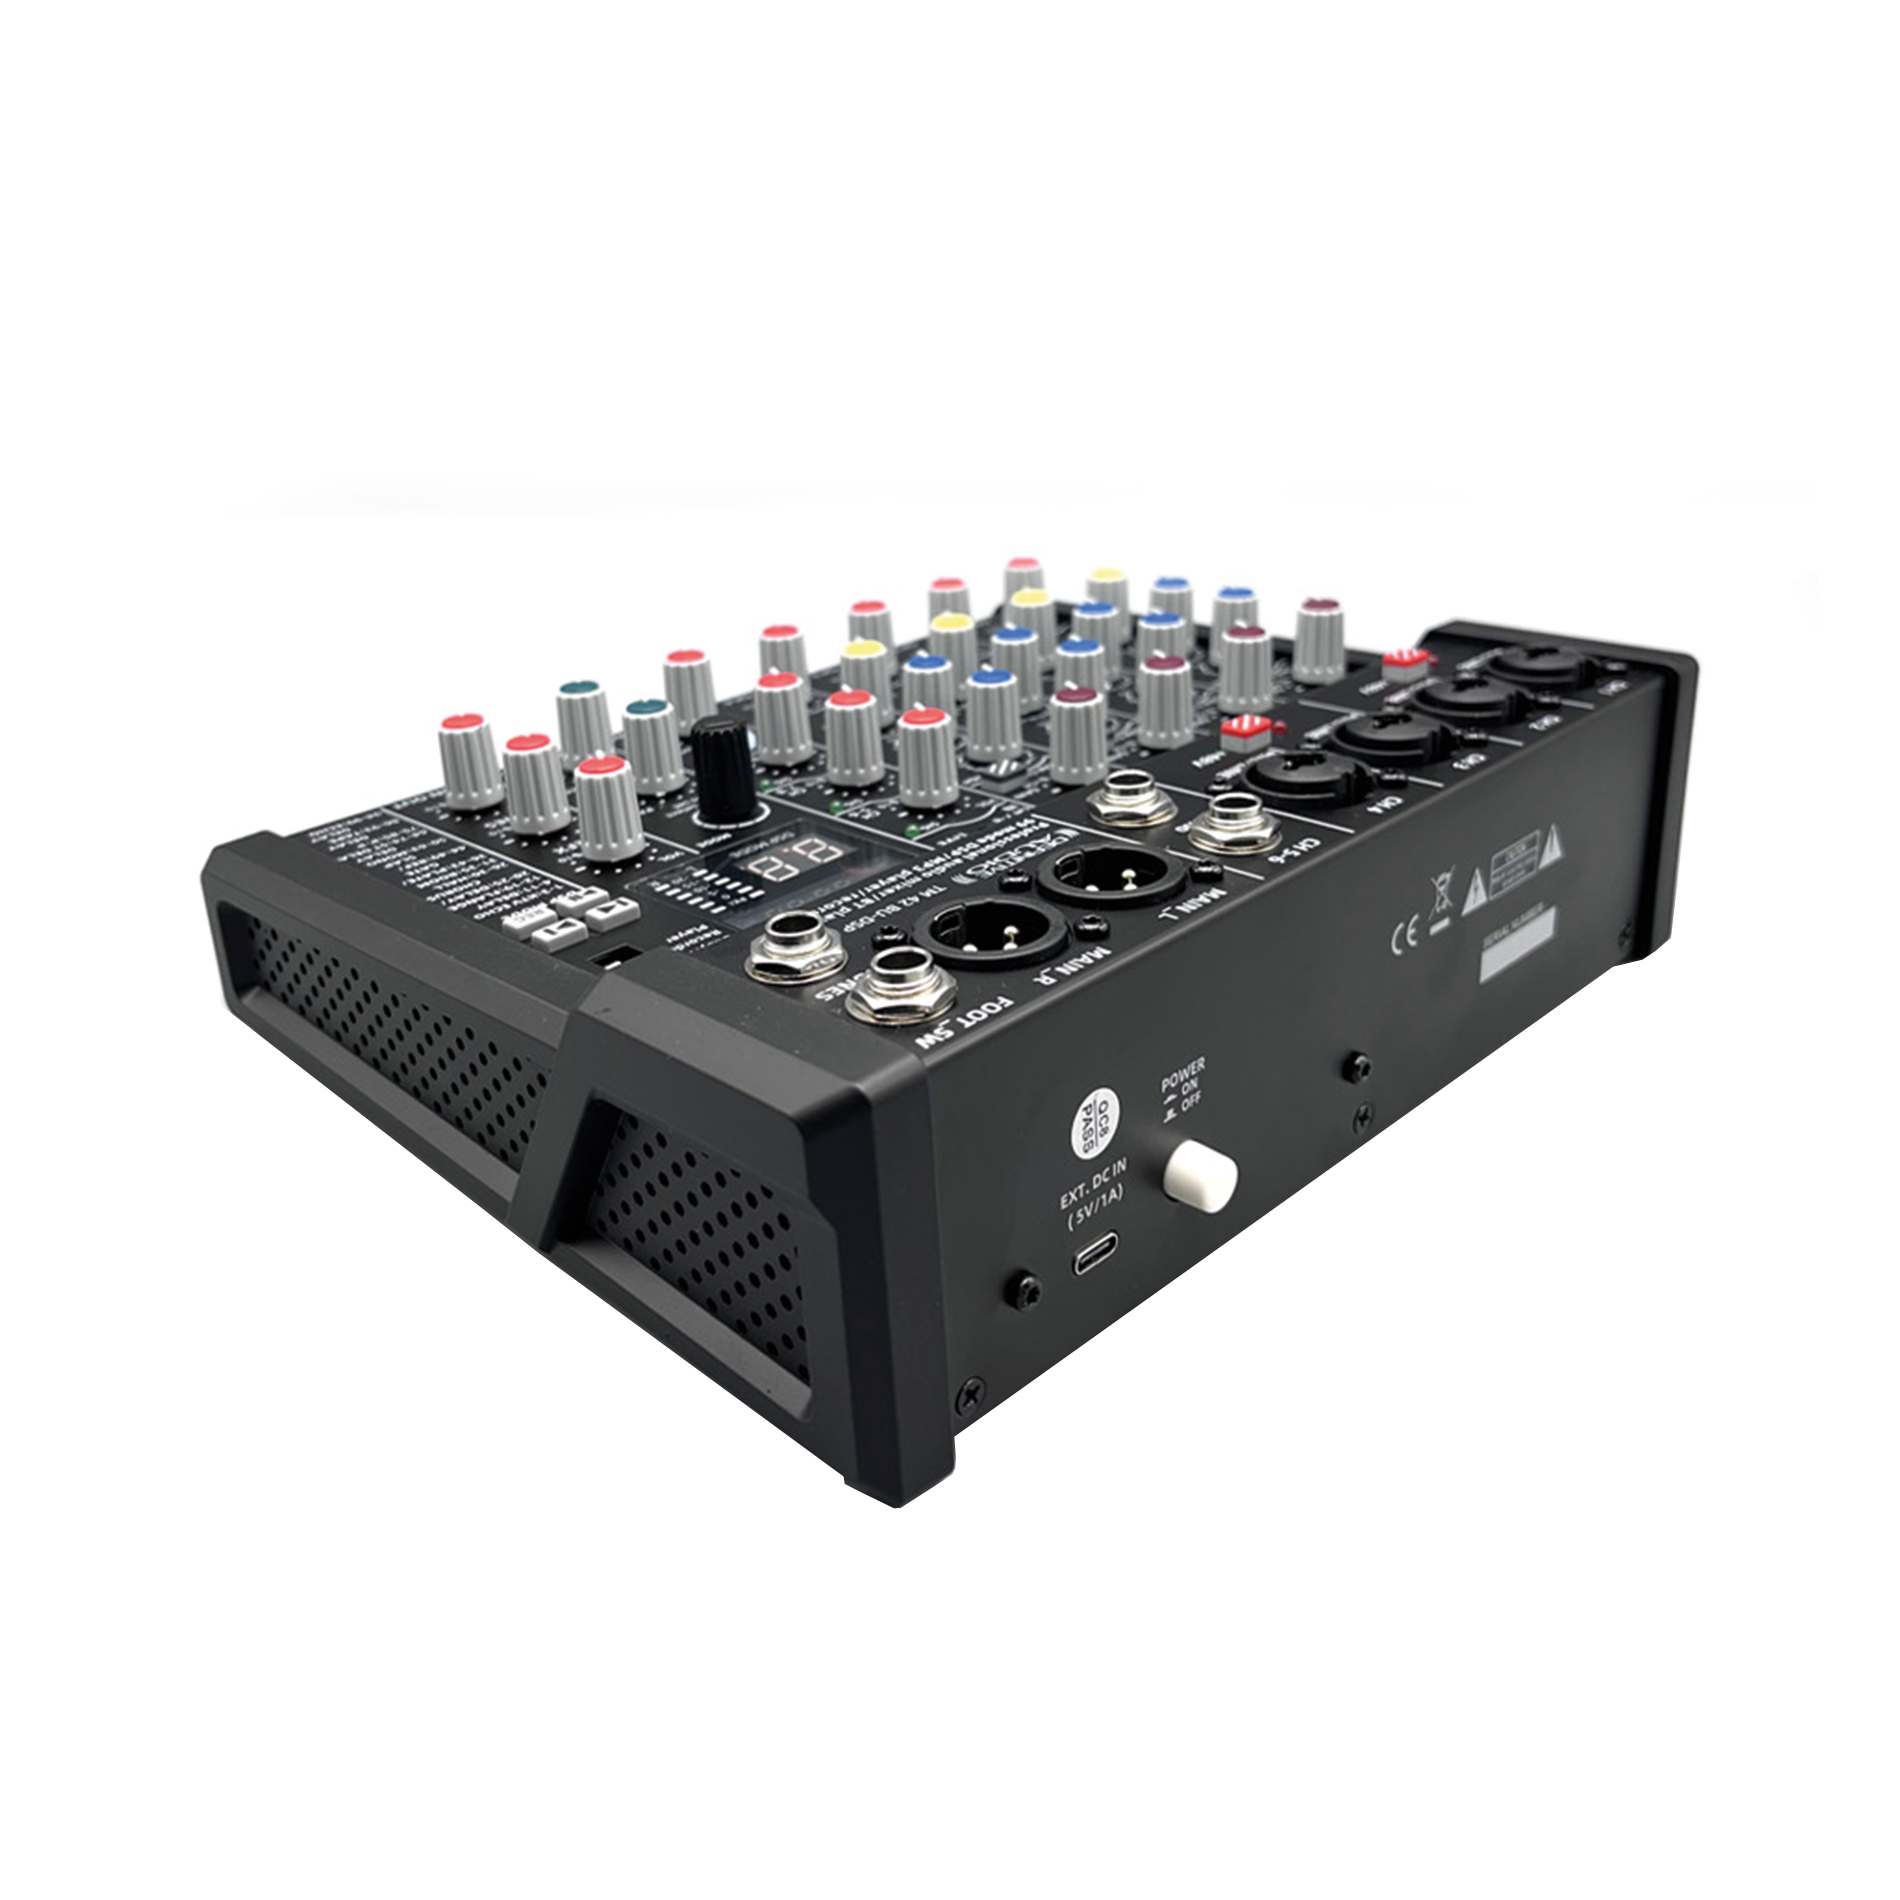 Definitive Audio Tm 42 Bu-dsp - Analog mixing desk - Variation 4